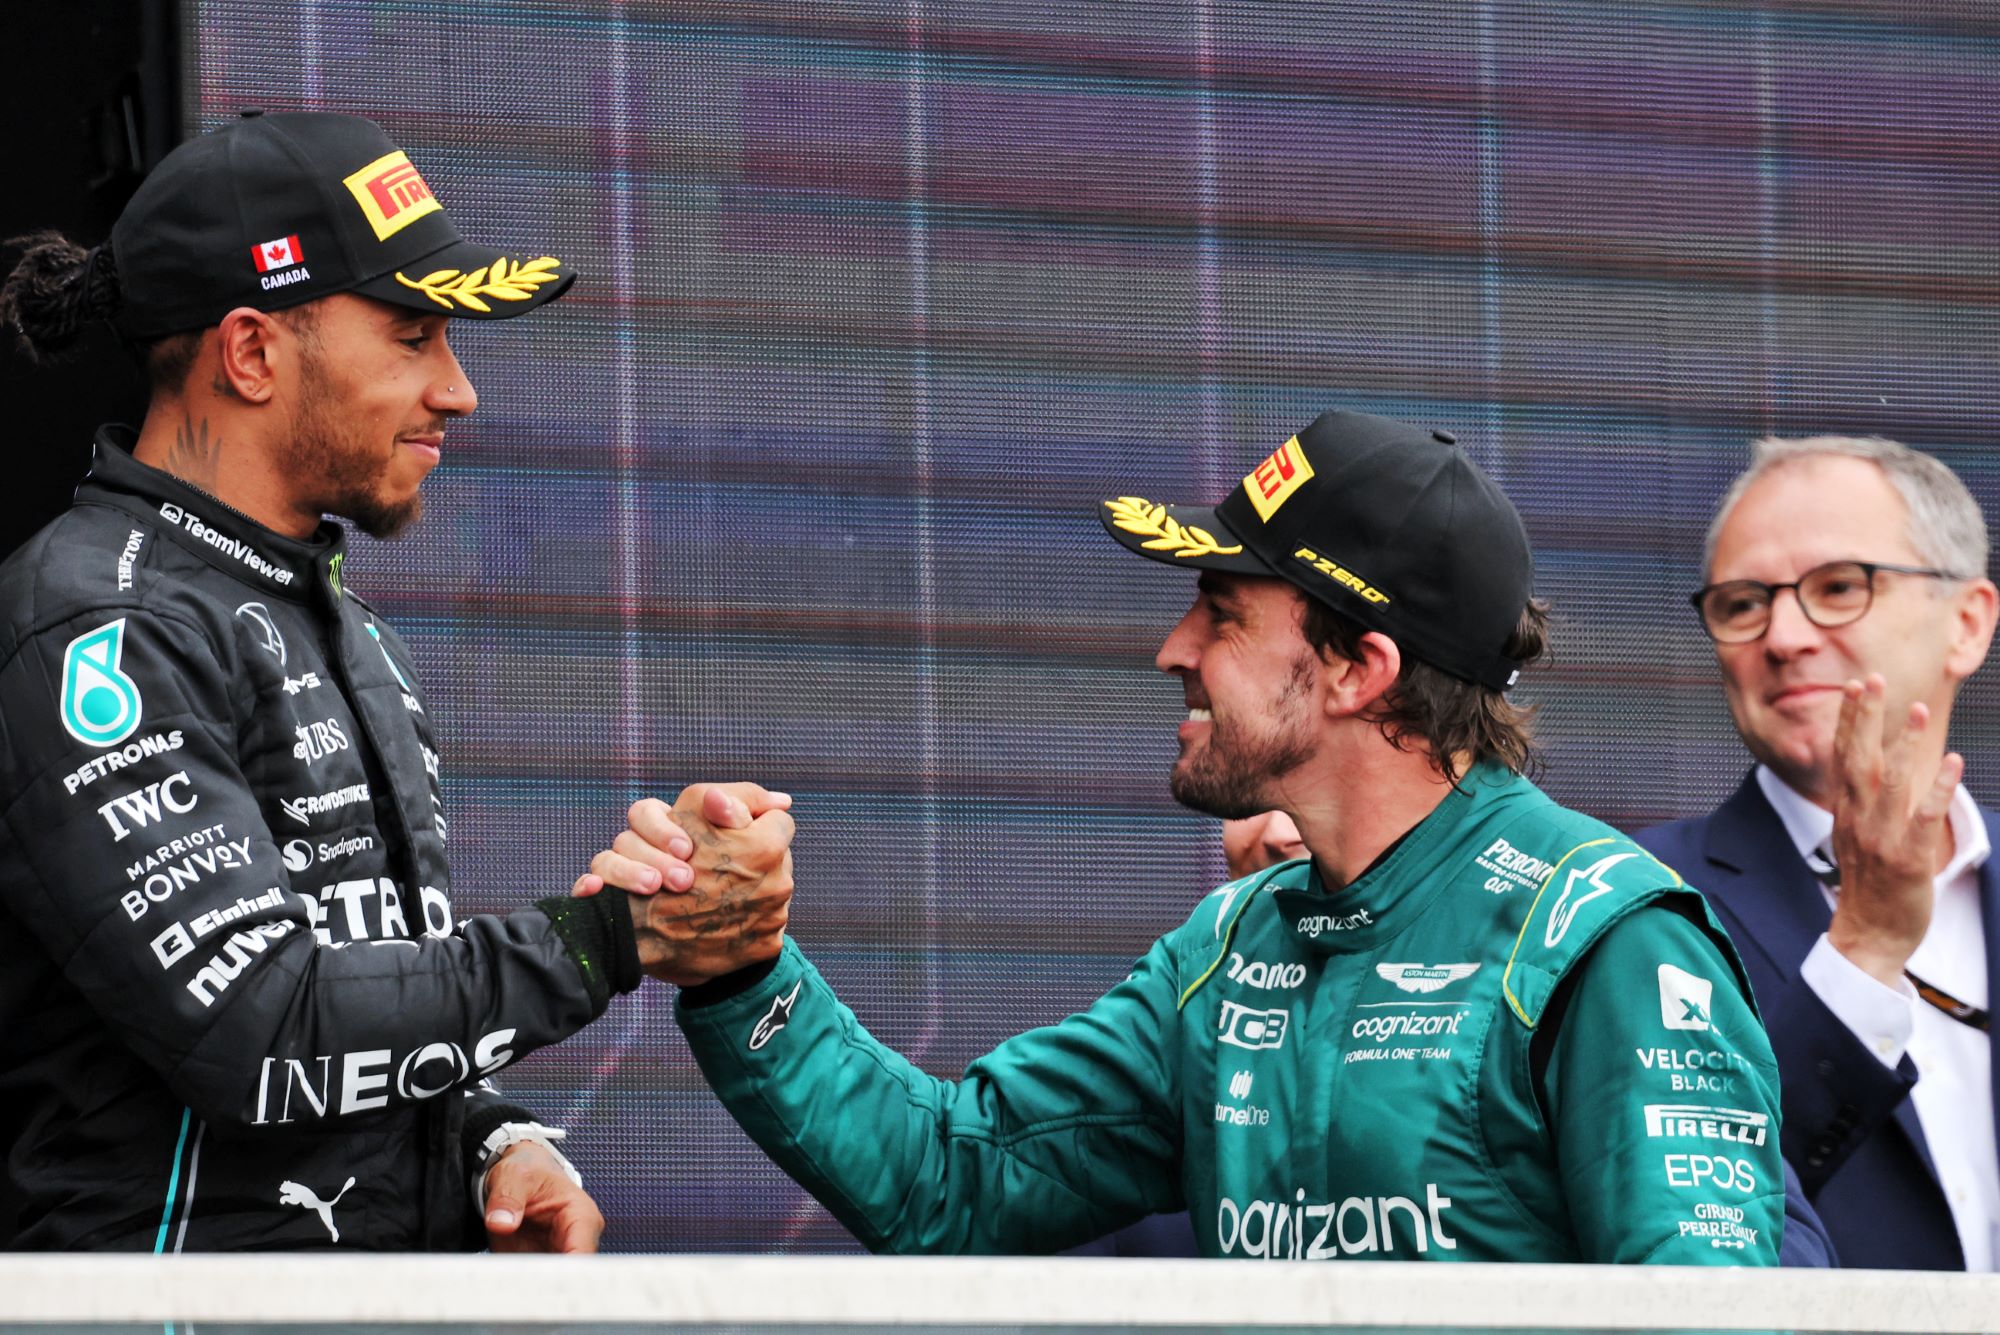 F1: “Nunca seremos amigos”, afirmou Alonso descartando amizade com Hamilton